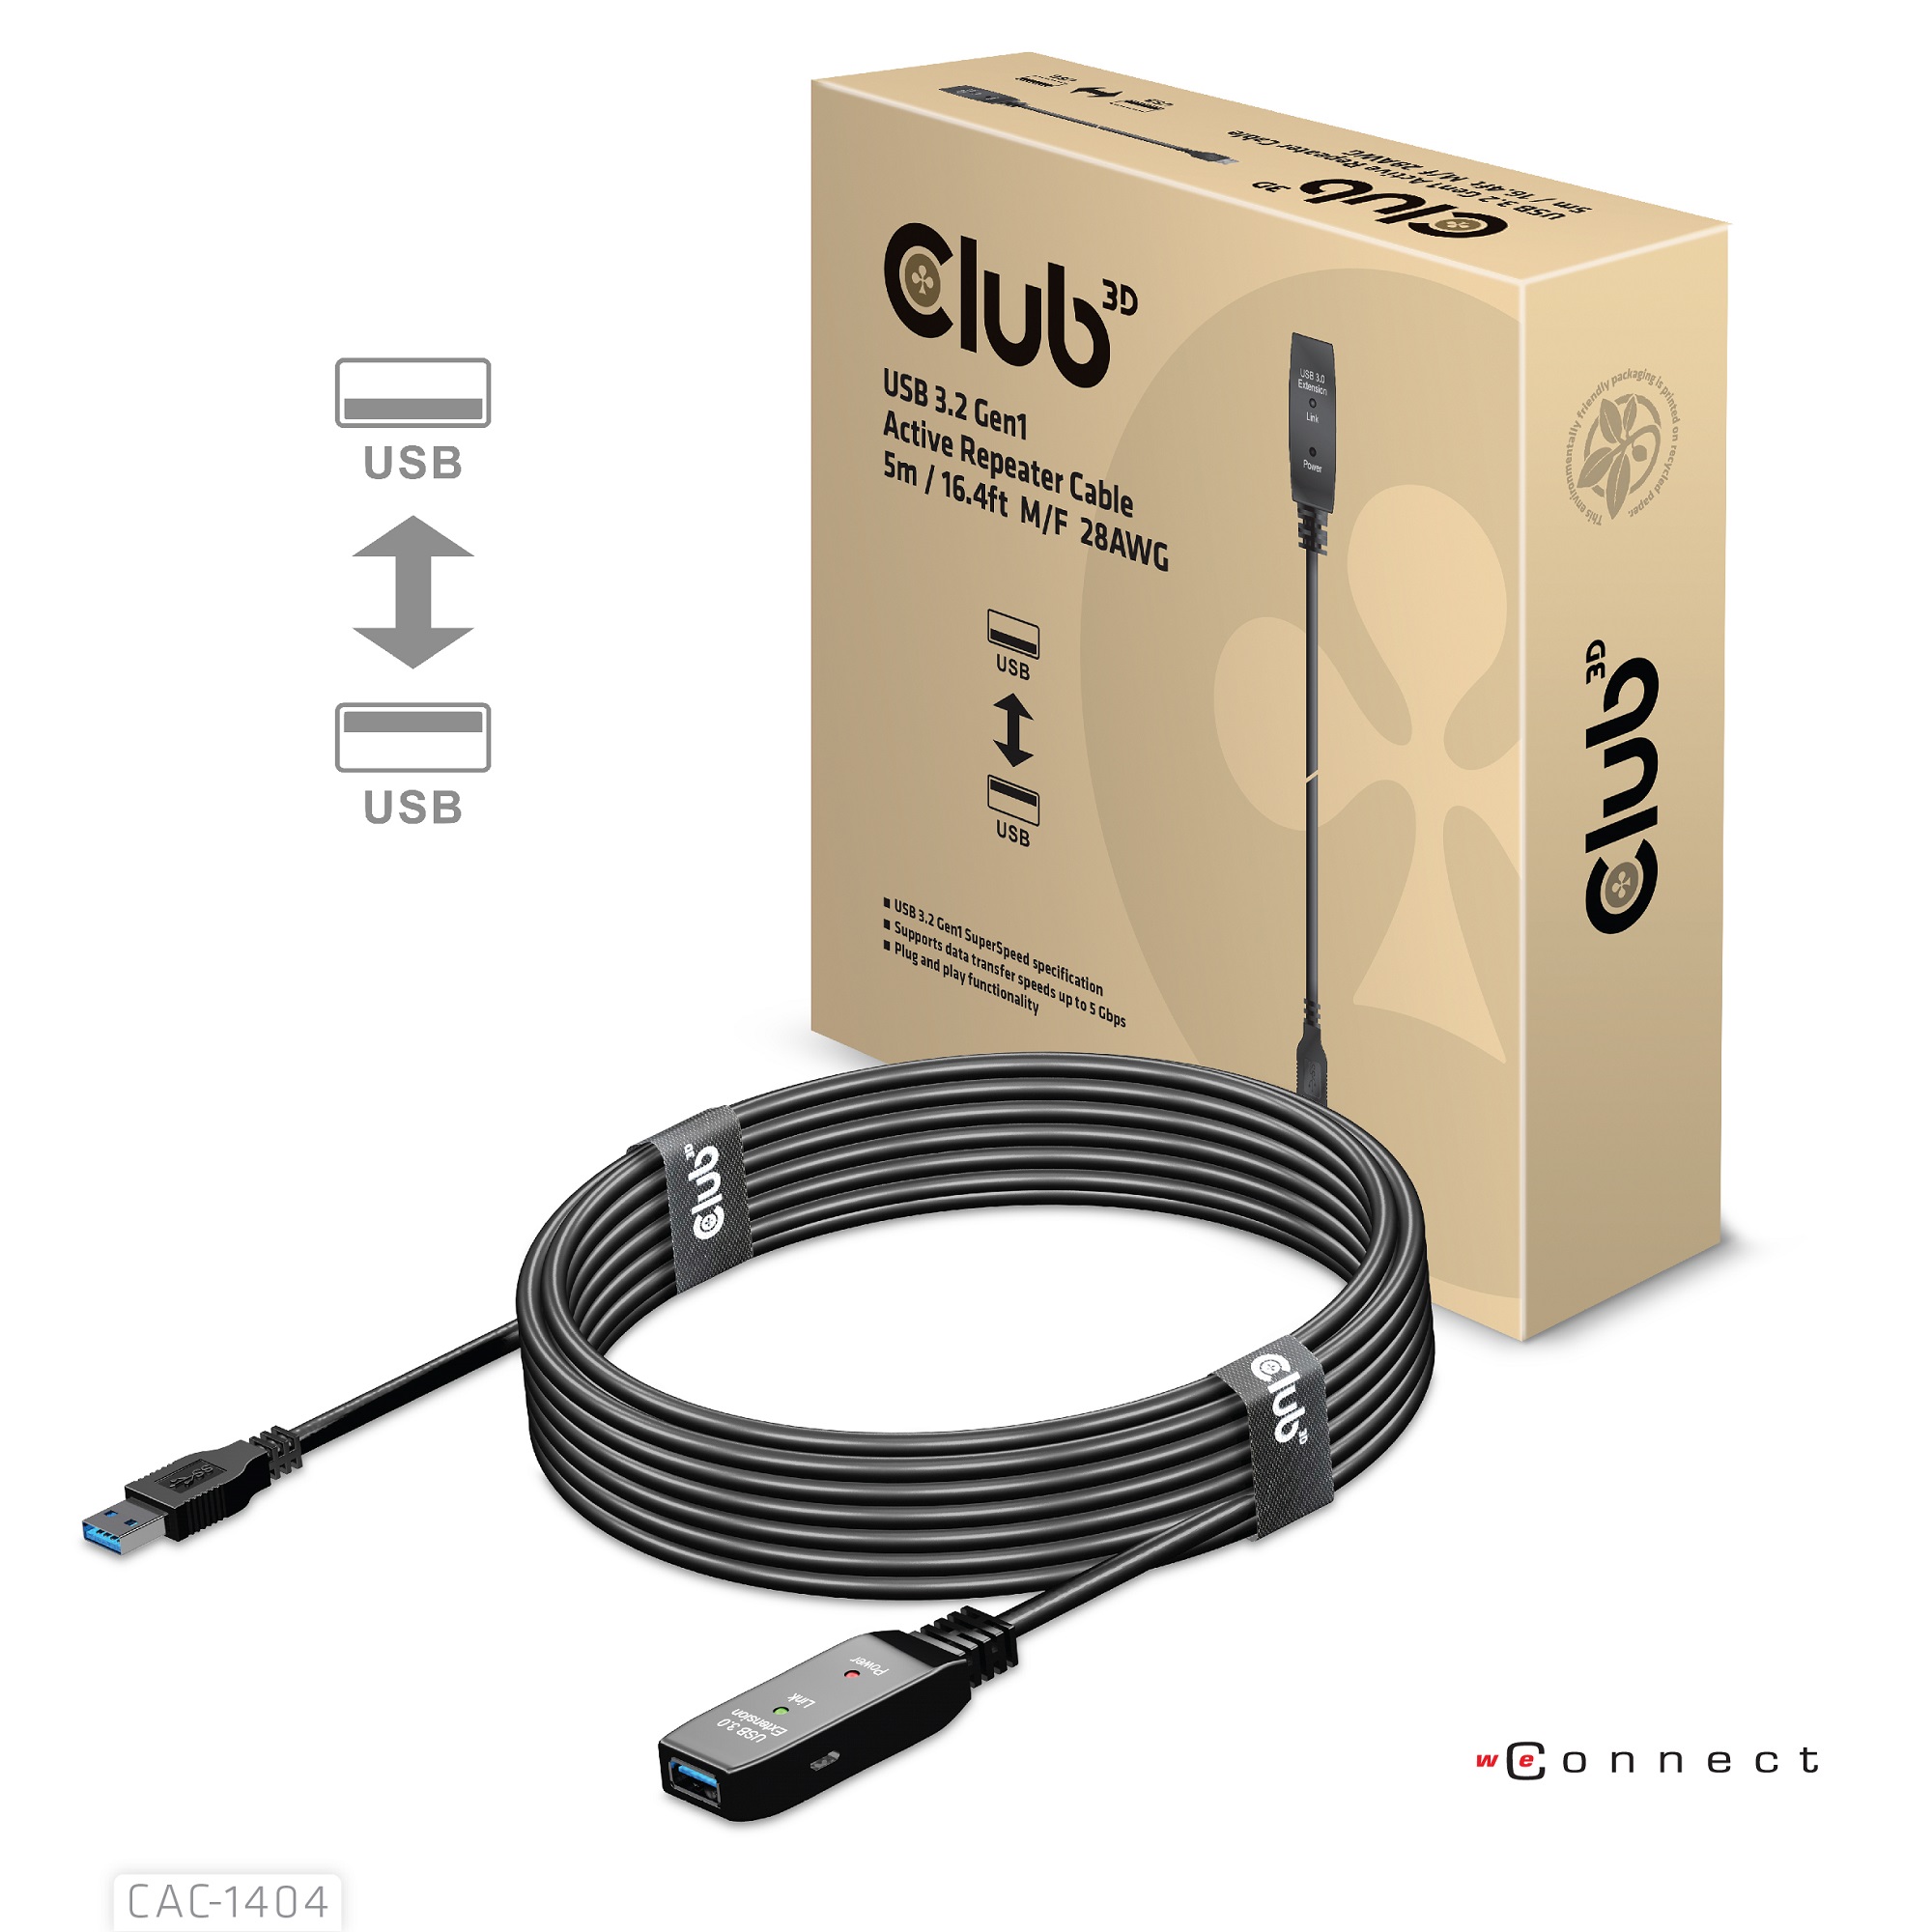 Club 3D USB 3.2 Verlängerungskabel - 5m